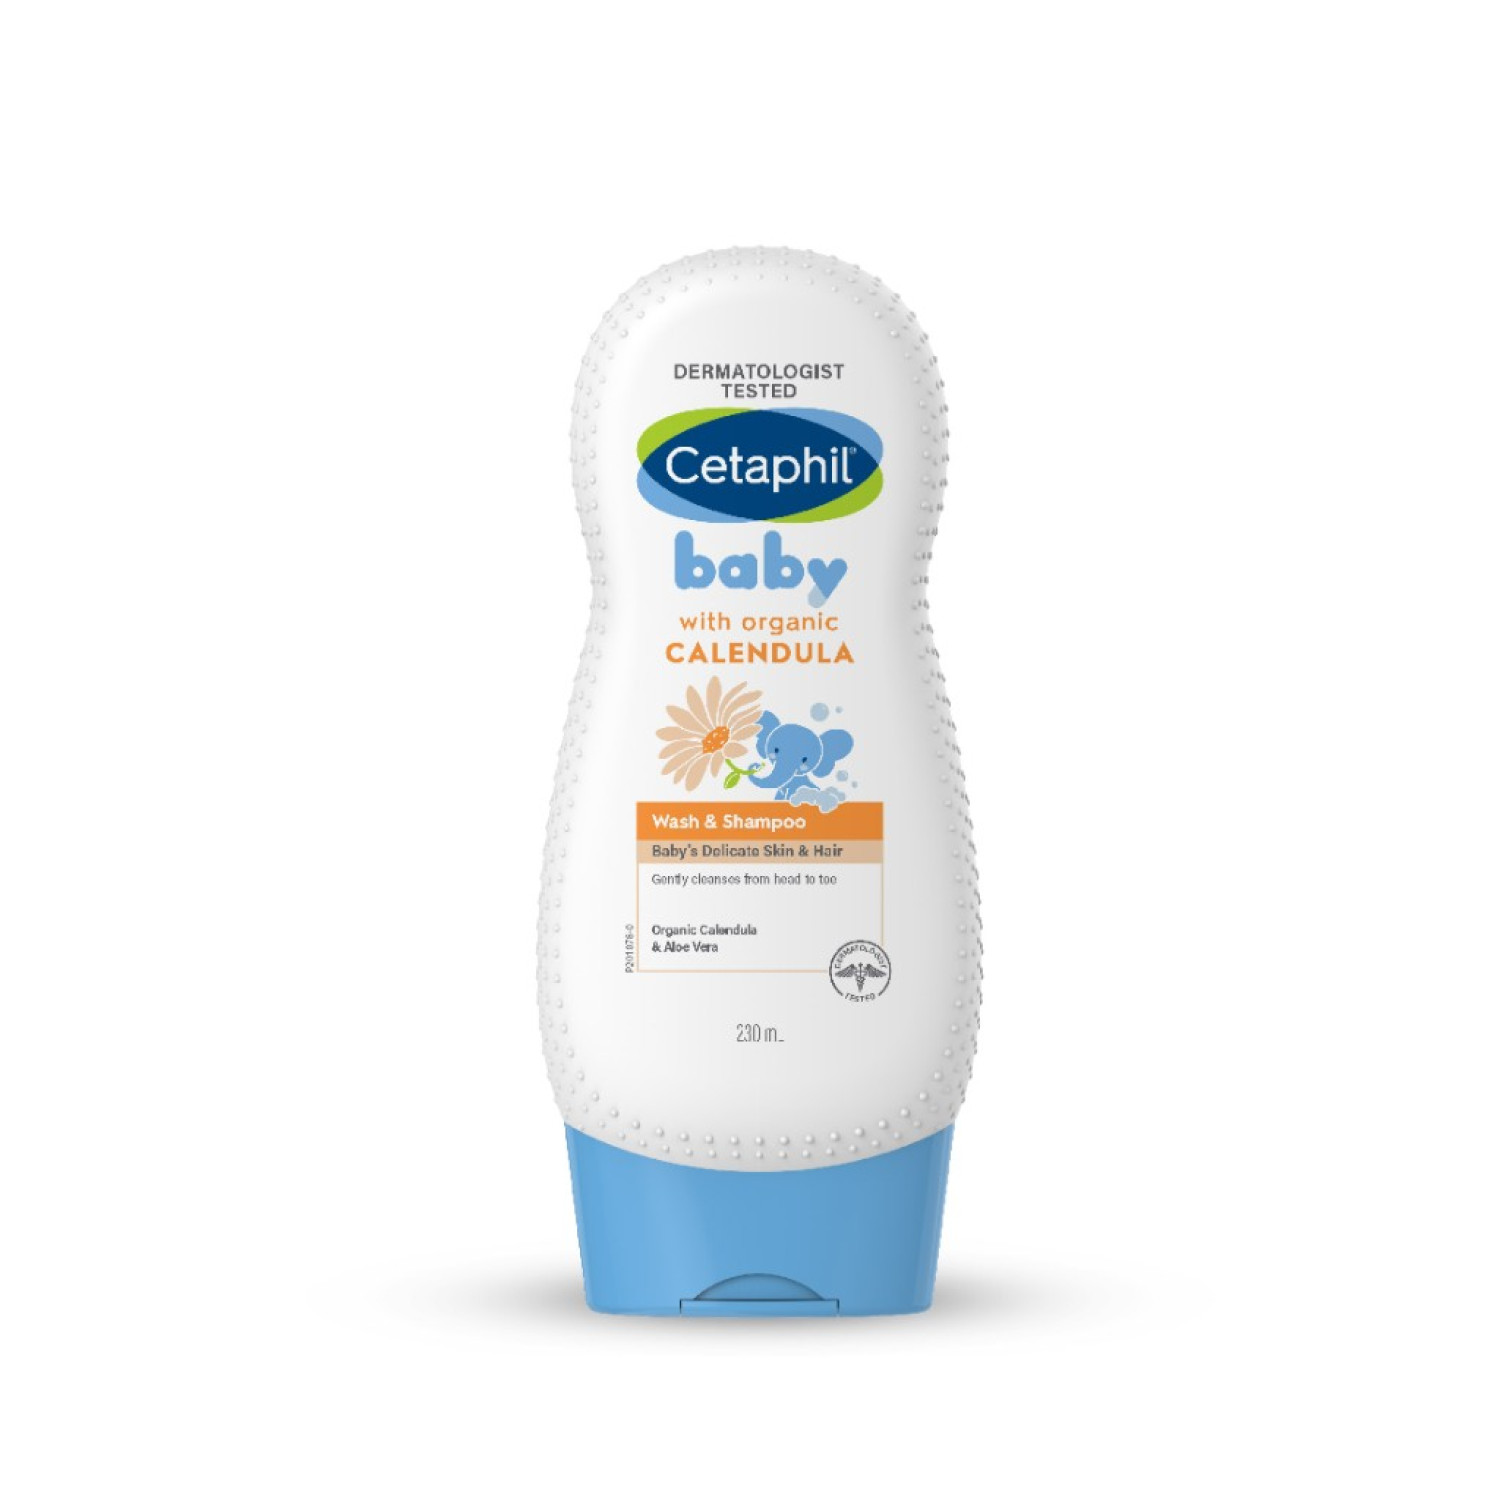 cetaphil-baby-wash-shampoo-organic-calendula-230-ml-6601399a2af9d.jpeg